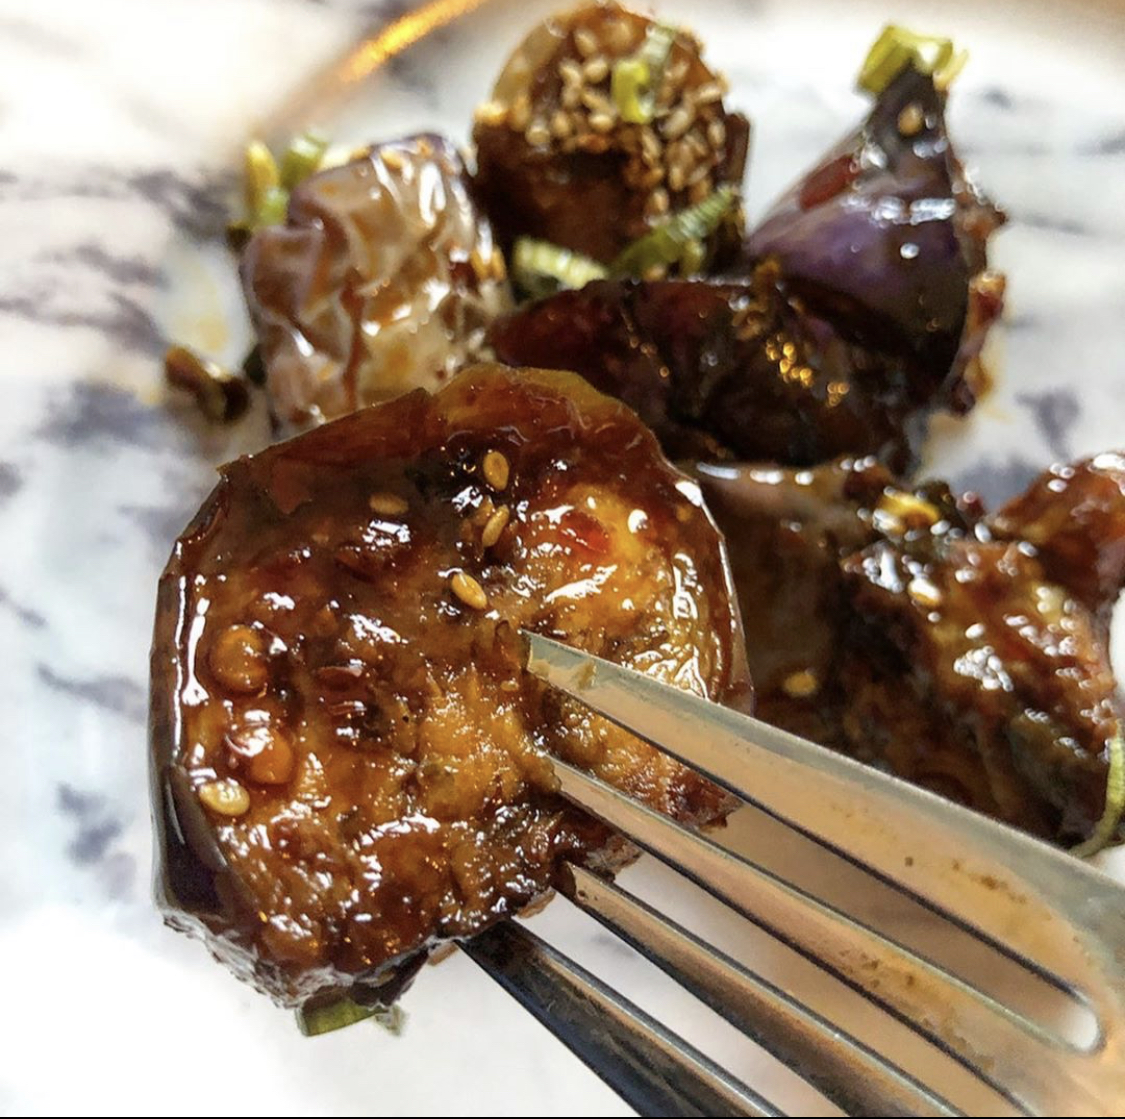 Batignolles lesbatignolles paris paris17 food asianfood asian yansai test 